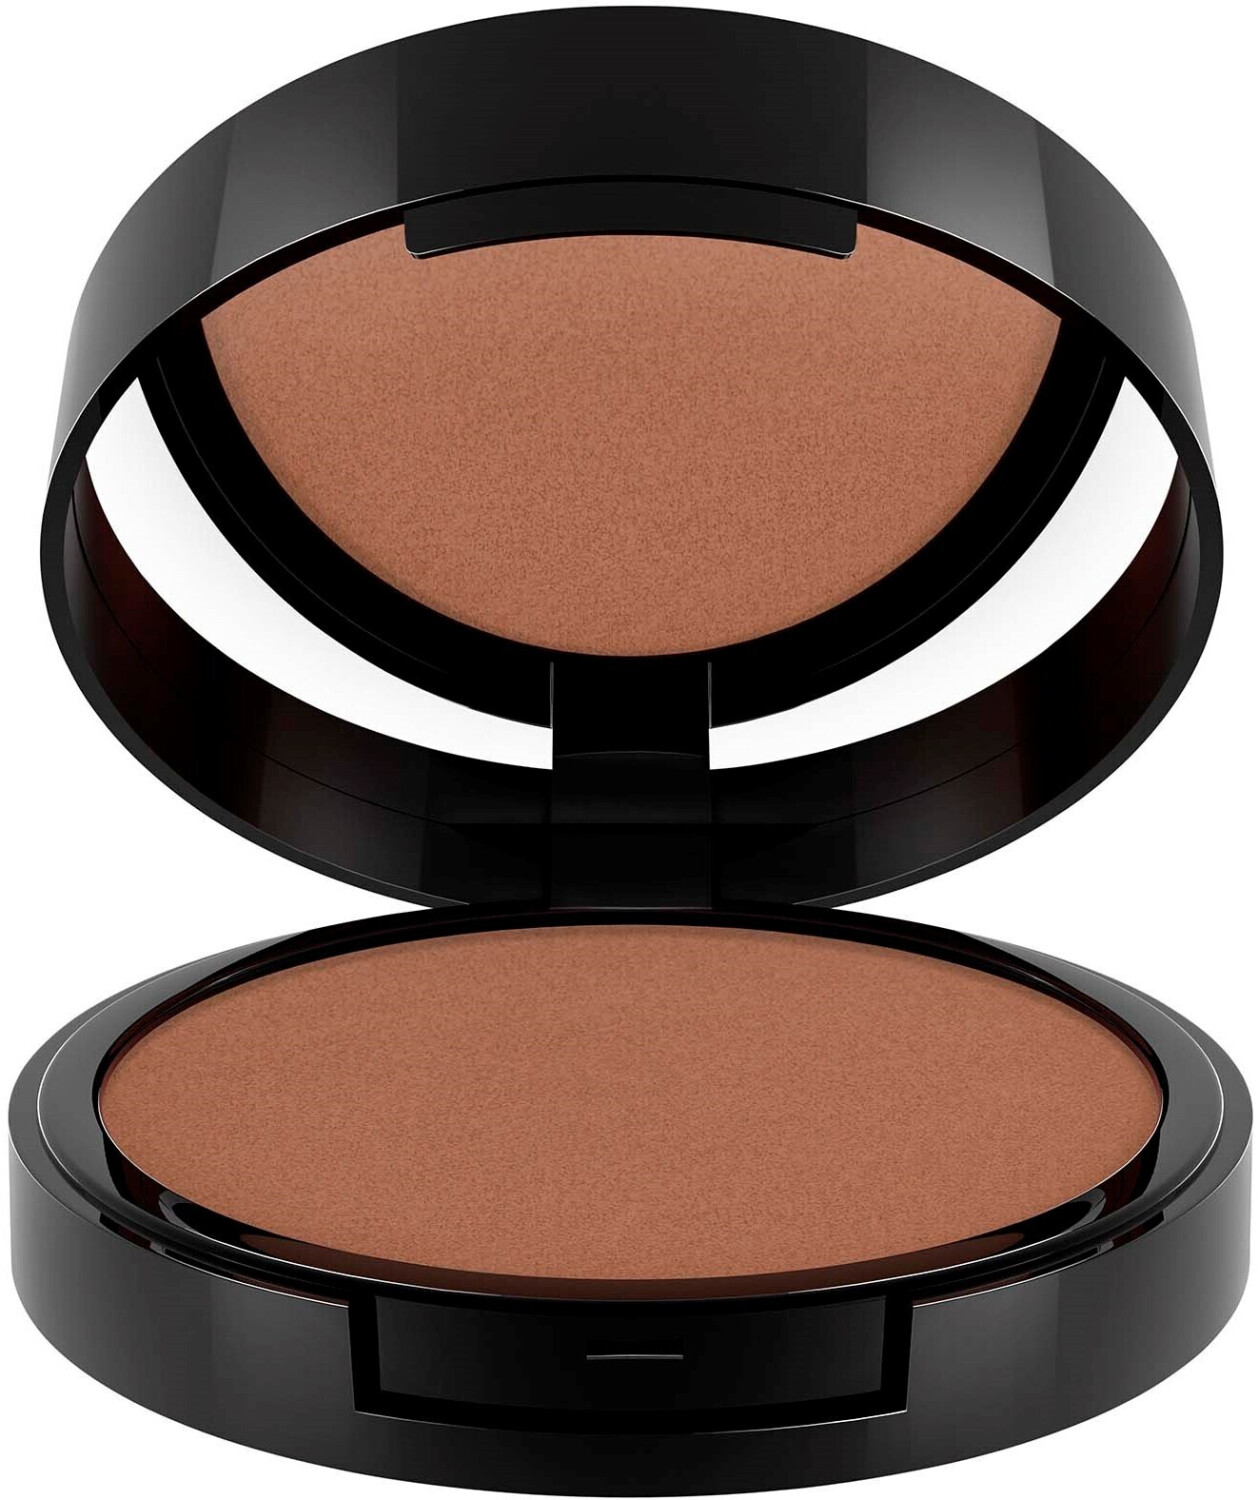 Photos - Face Powder / Blush IsaDora Nature Enhanced Cream Blush (3g) 41 Caramel Tan 